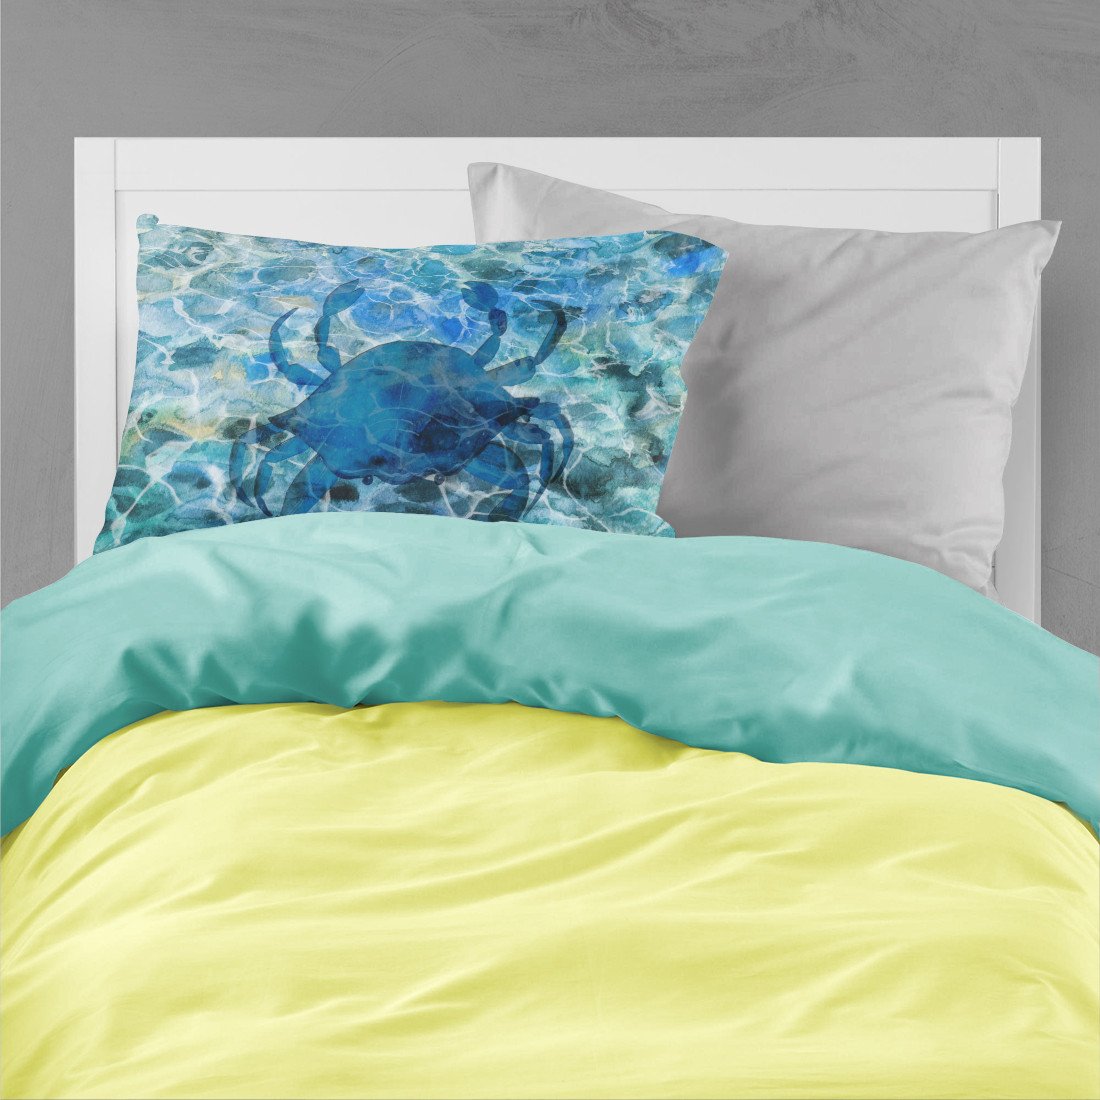 Blue Crab Under Water Fabric Standard Pillowcase BB5369PILLOWCASE by Caroline's Treasures